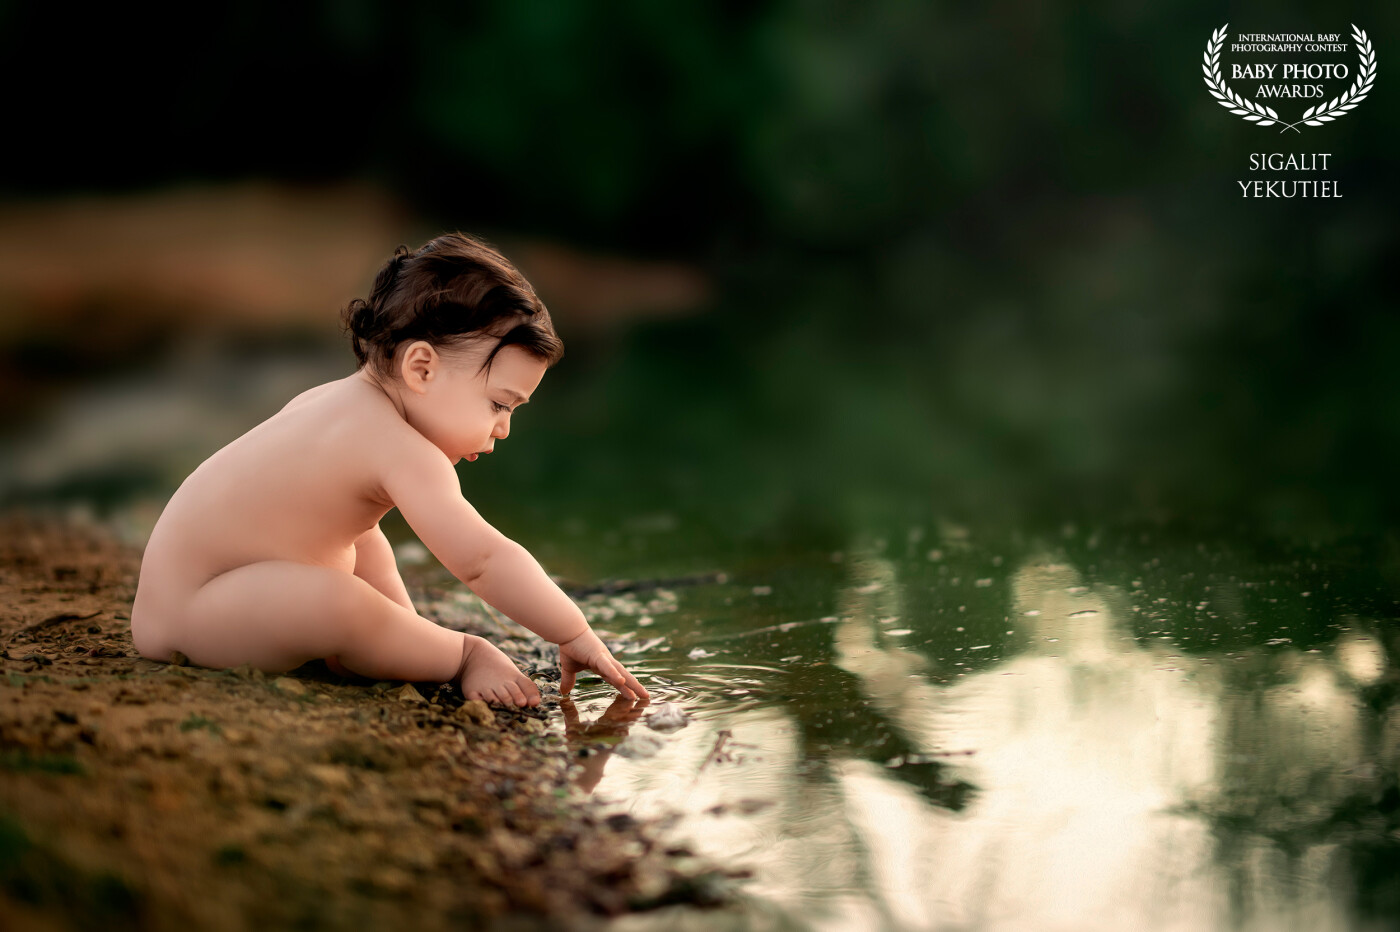 Baby boy Amit exploring nature